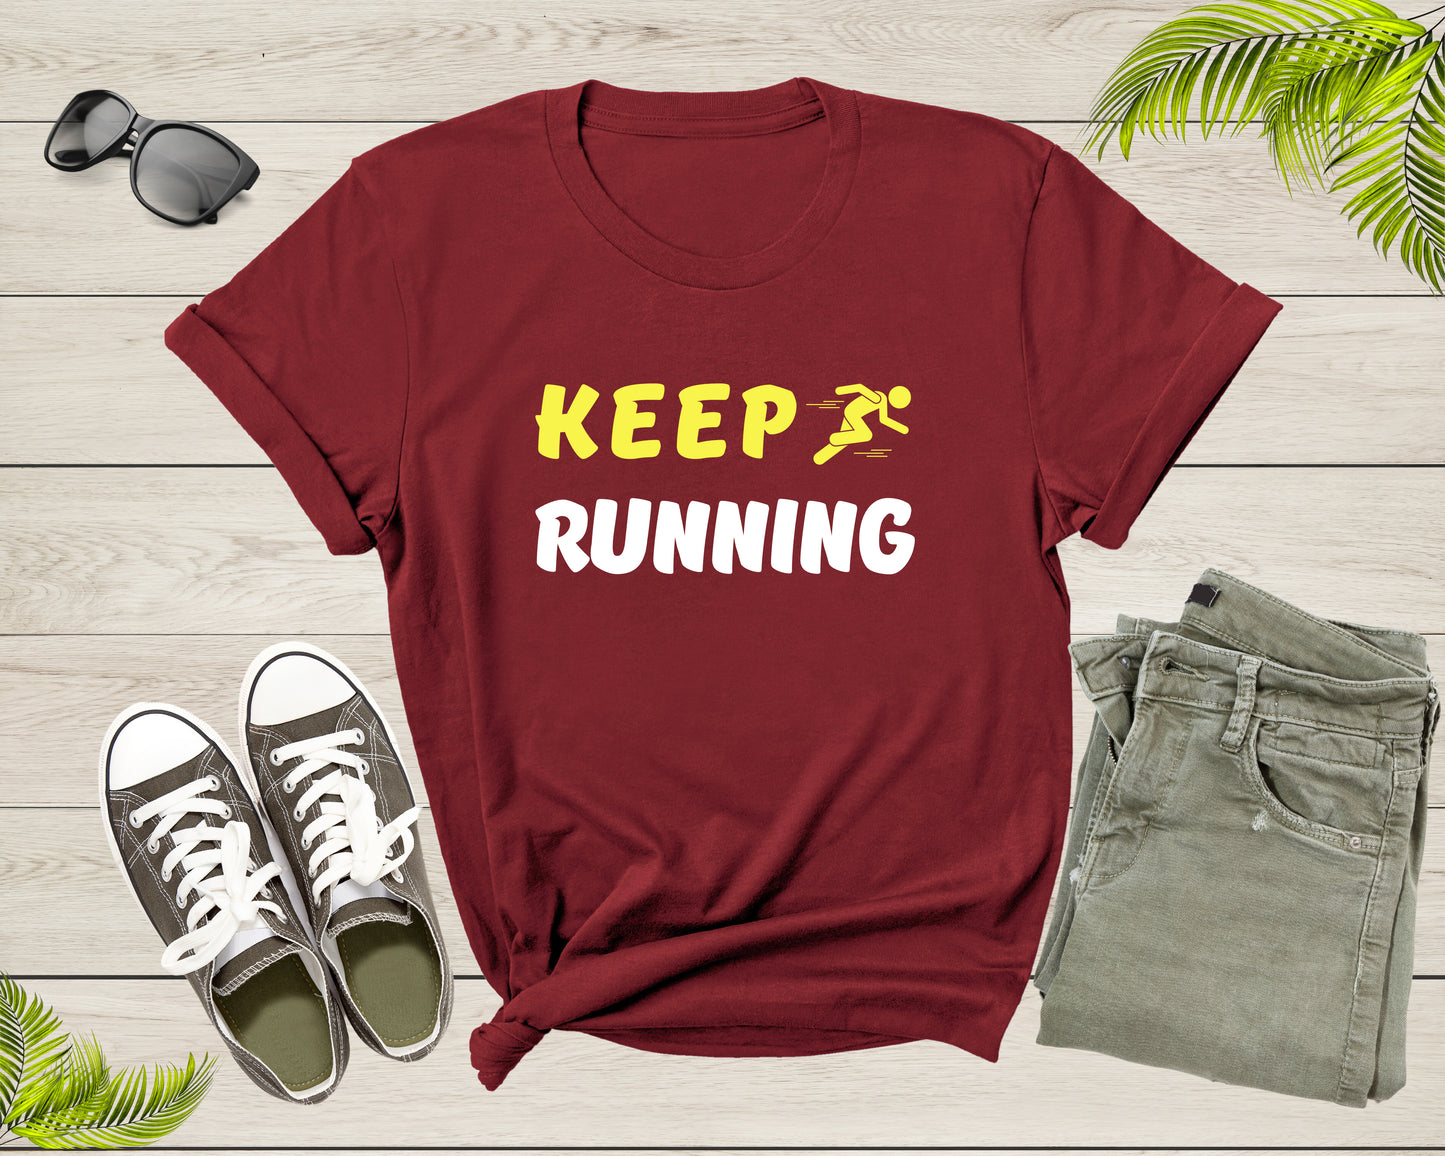 Keep Running Motivational Runner Athlete Marathon Sprinter T-shirt Marathon Runner Shirt Gift For Runner Running Gift Workout Fitness Shirt